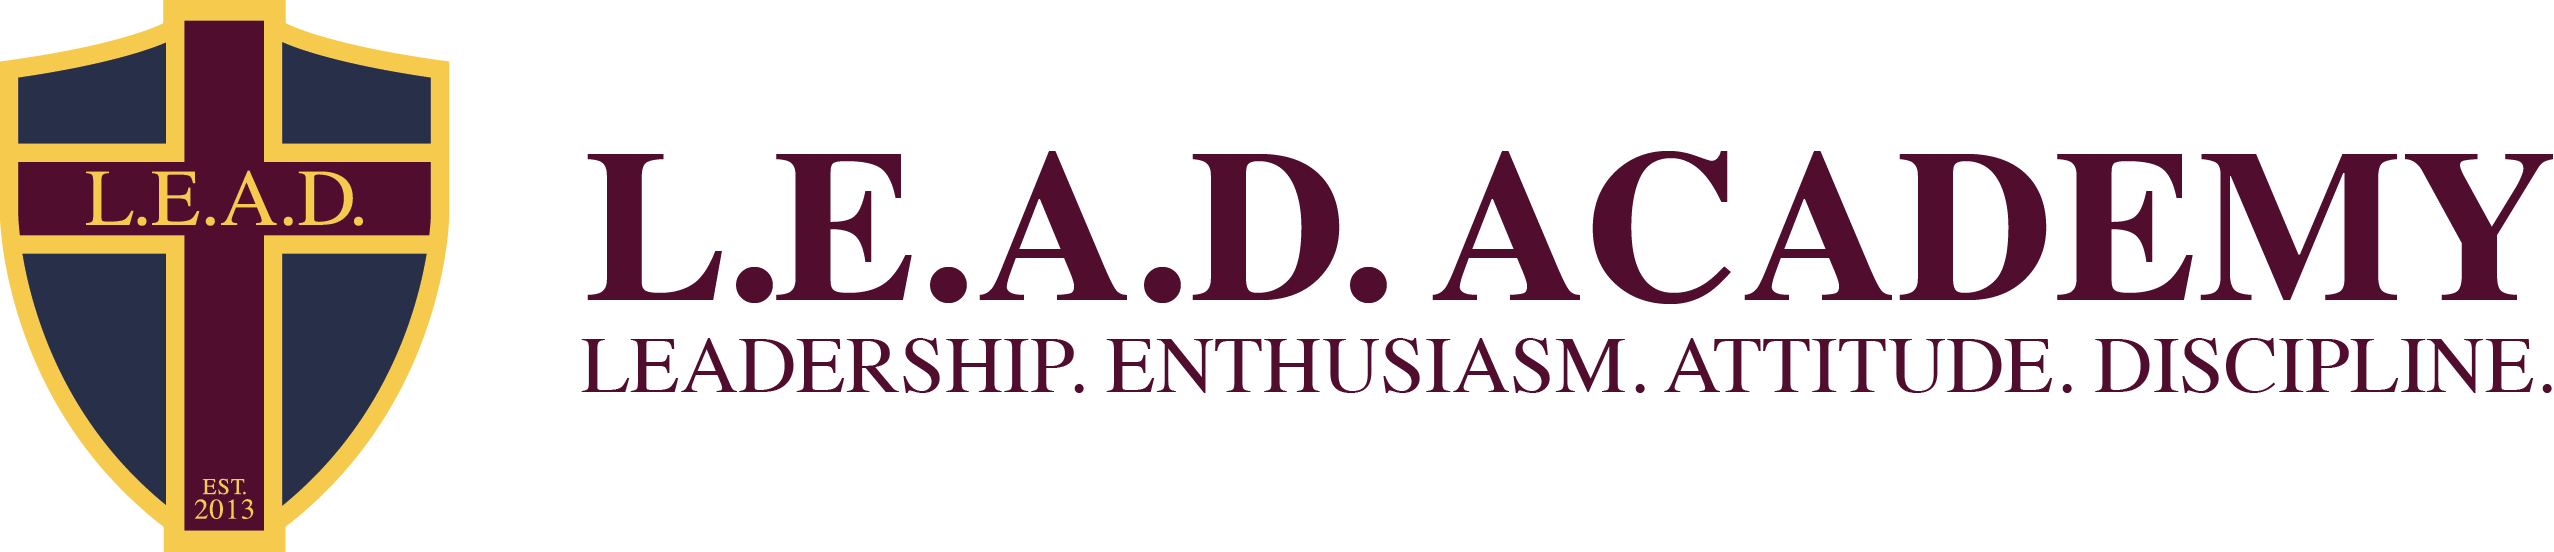 L.E.A.D. Academy logo